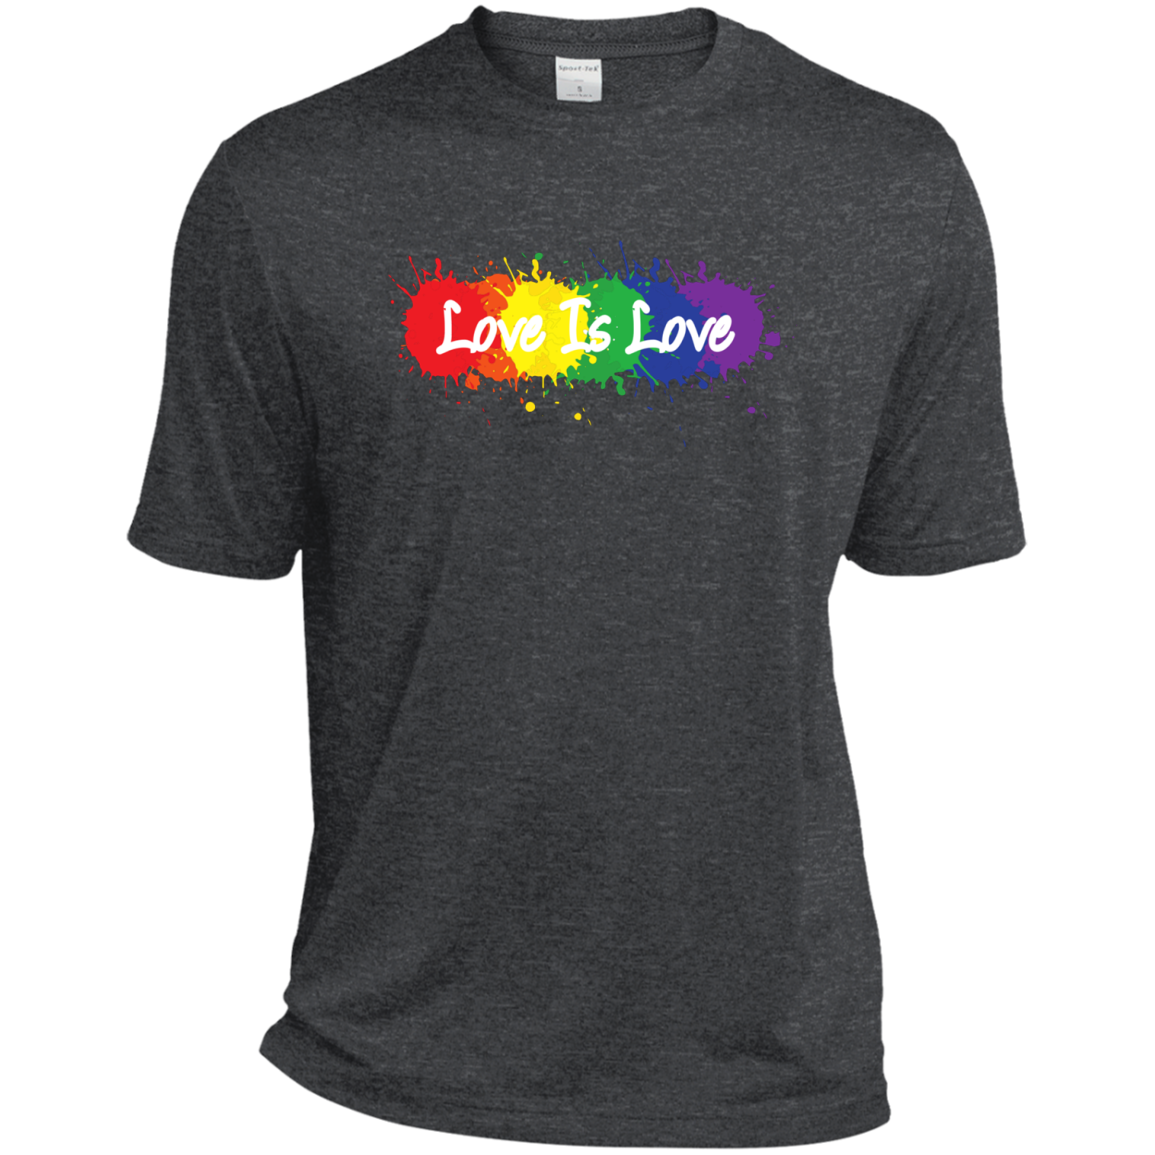  "Love is Love" dark grey T Shirt for men LGBT Pride Equality tshirt for men